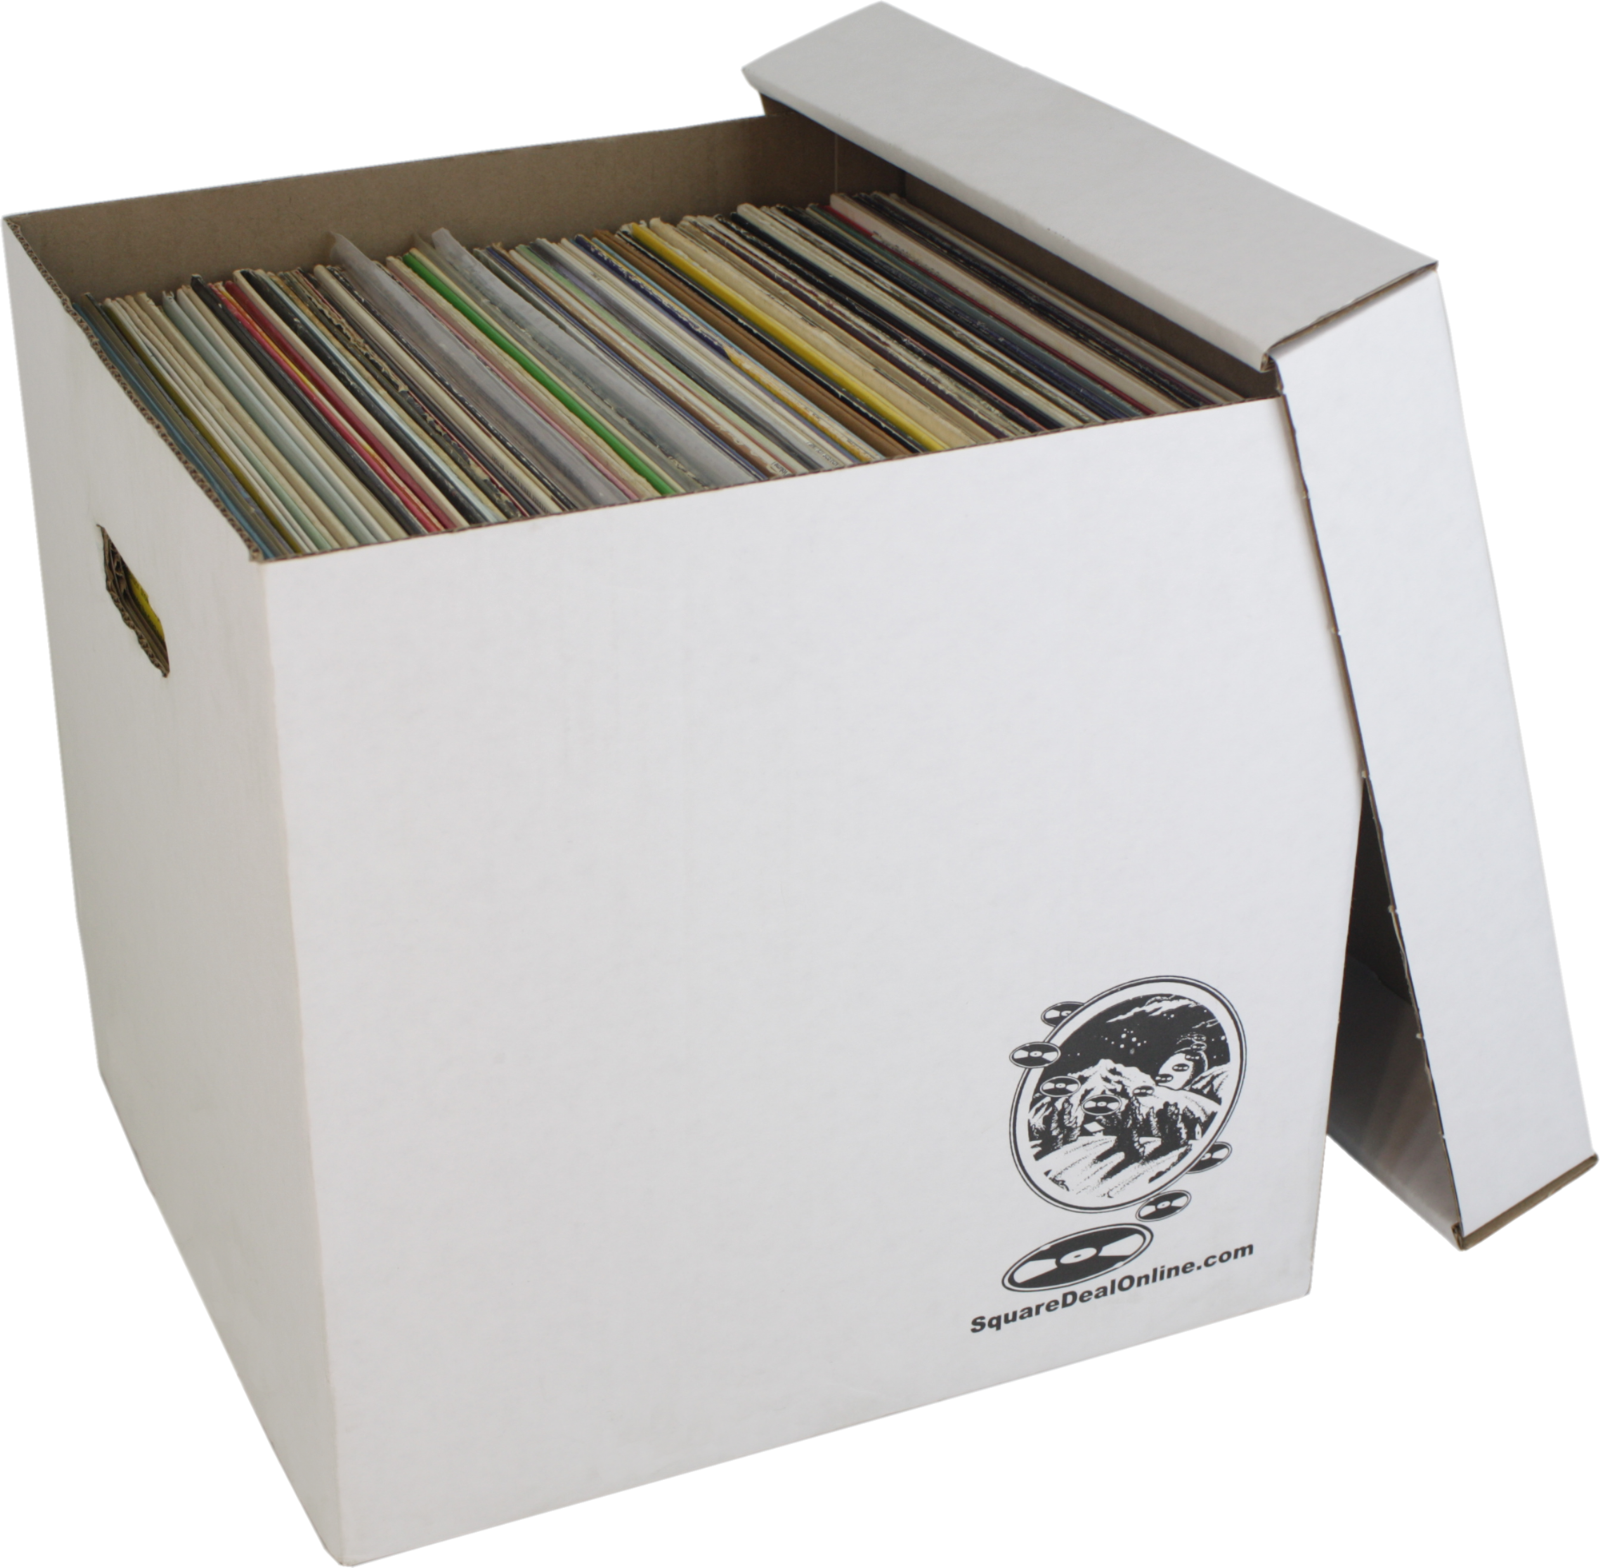 (10) 12" White Record Boxes with Lids - LP Vinyl Album 33rpm Cardboard Storage Square Deal Recordings & Supplies 12BC13 - фотография #5